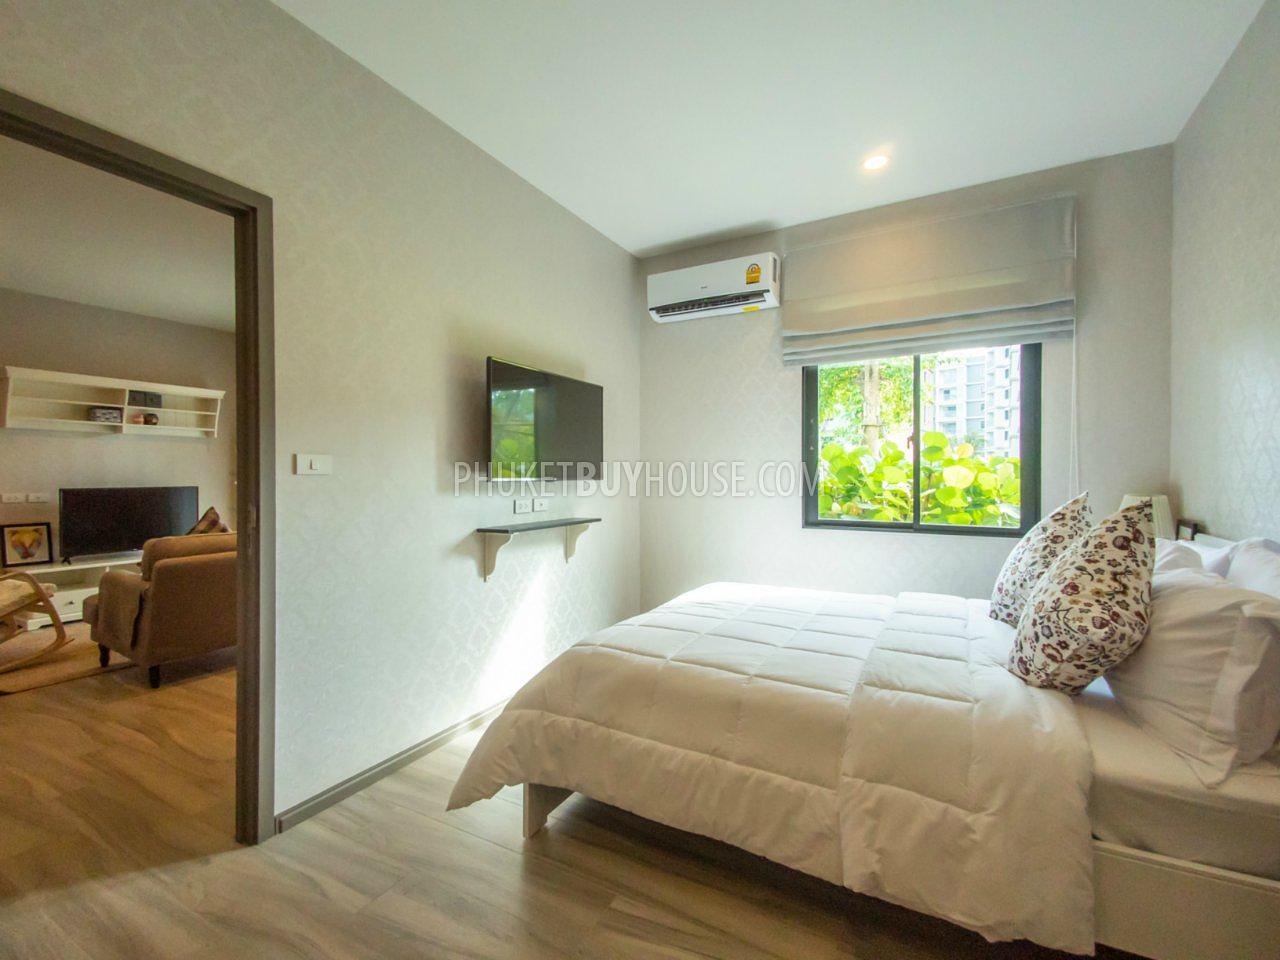 NAY5703: 1 Bedroom Apartment within 5 minutes walk to the Nai Yang beach. Photo #8